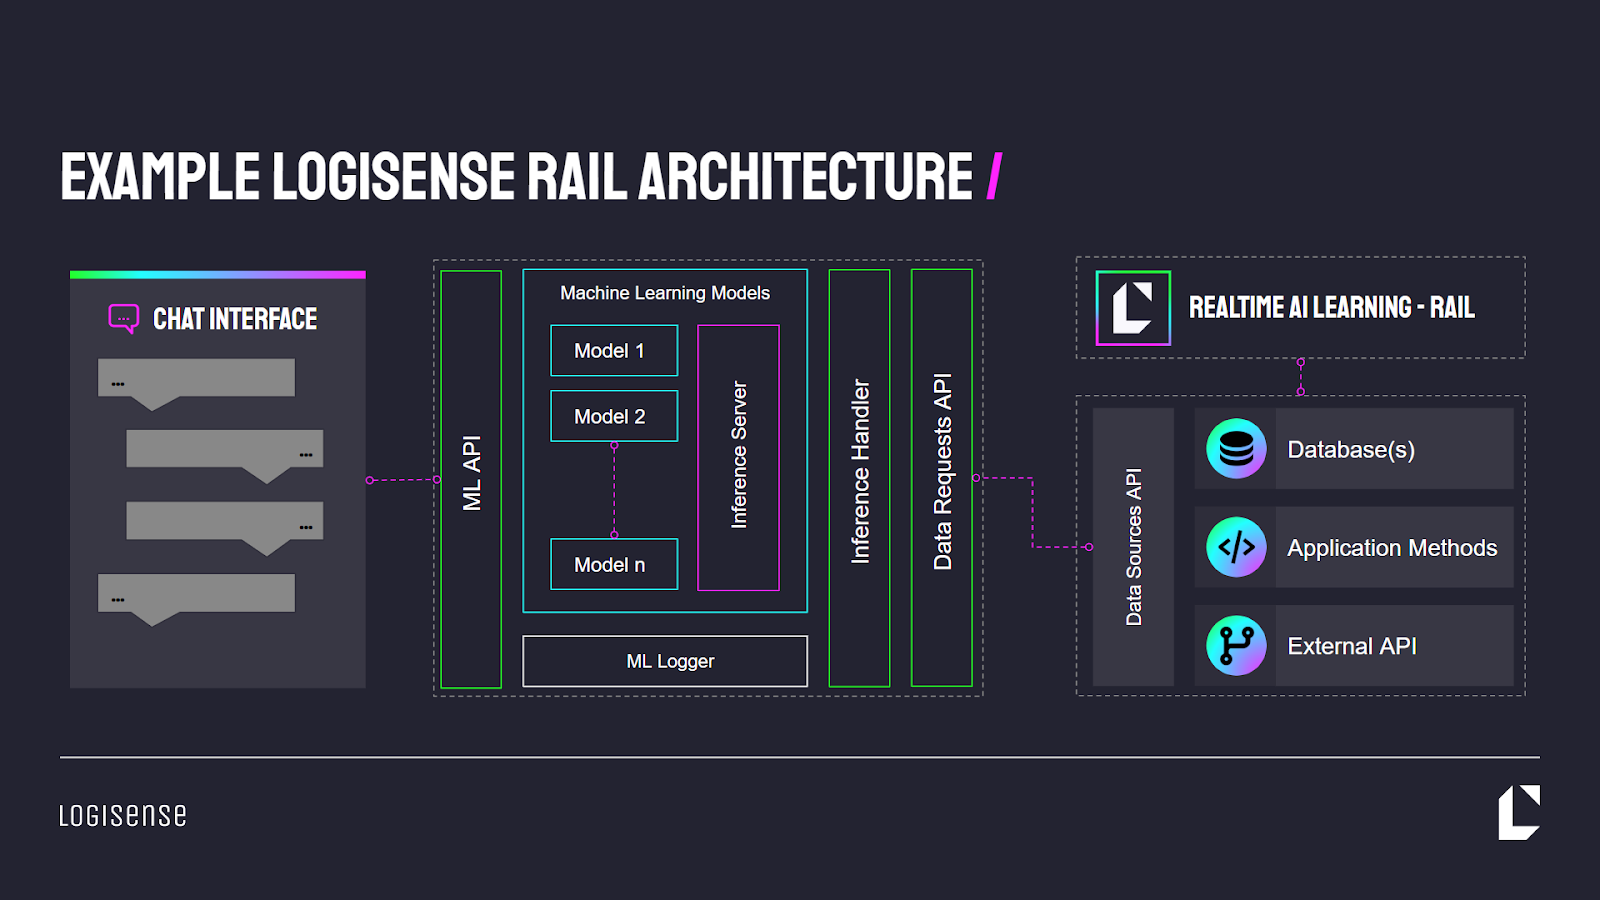 Example LogiSense RAIL Architecture